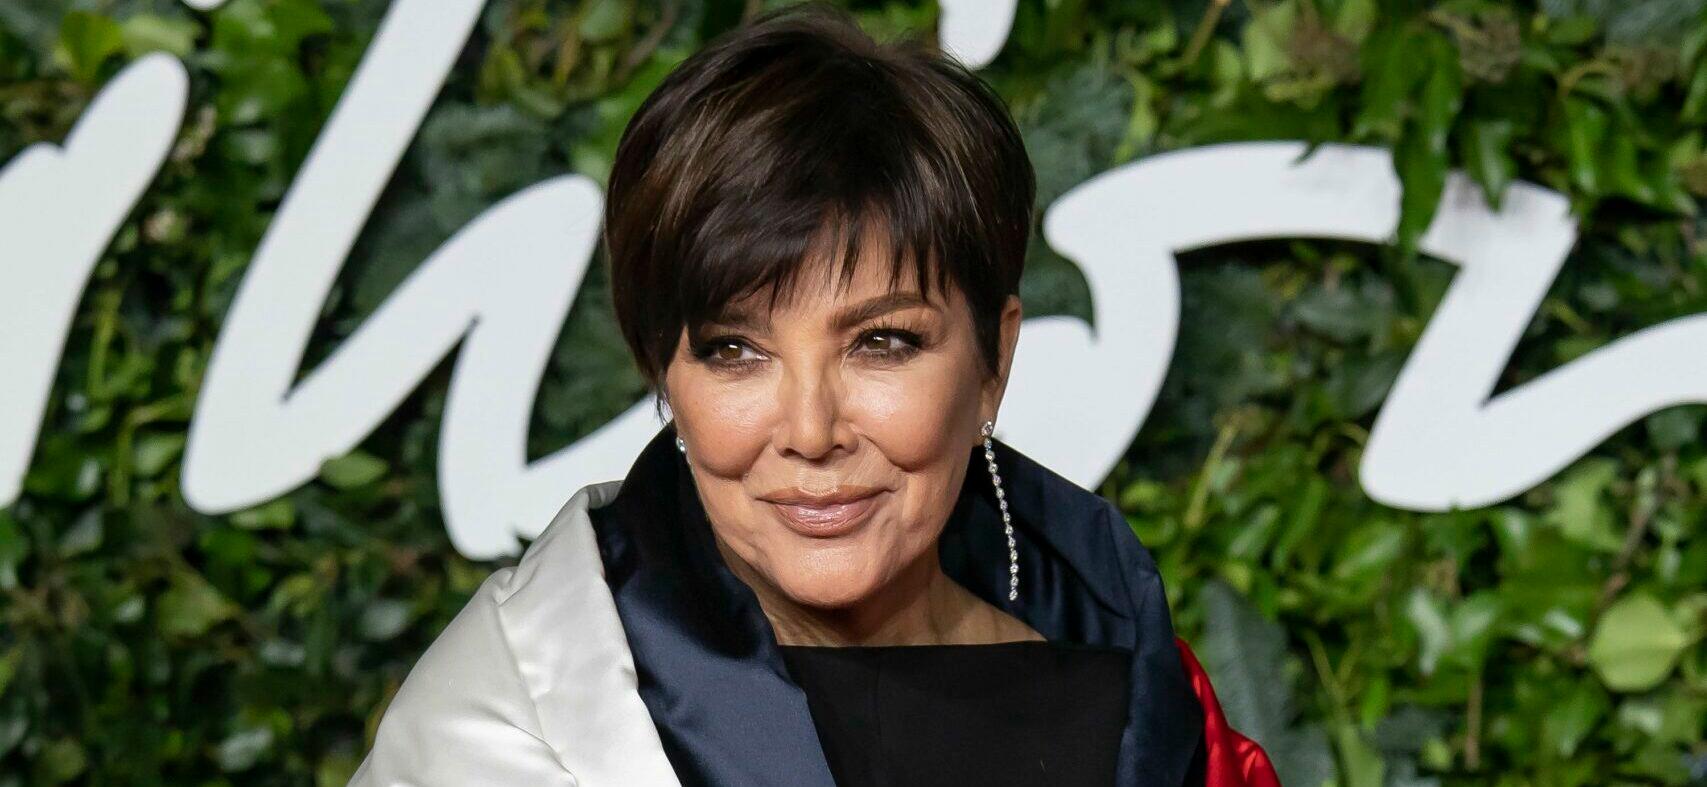 Kris Jenner at The Fashion Awards 2021